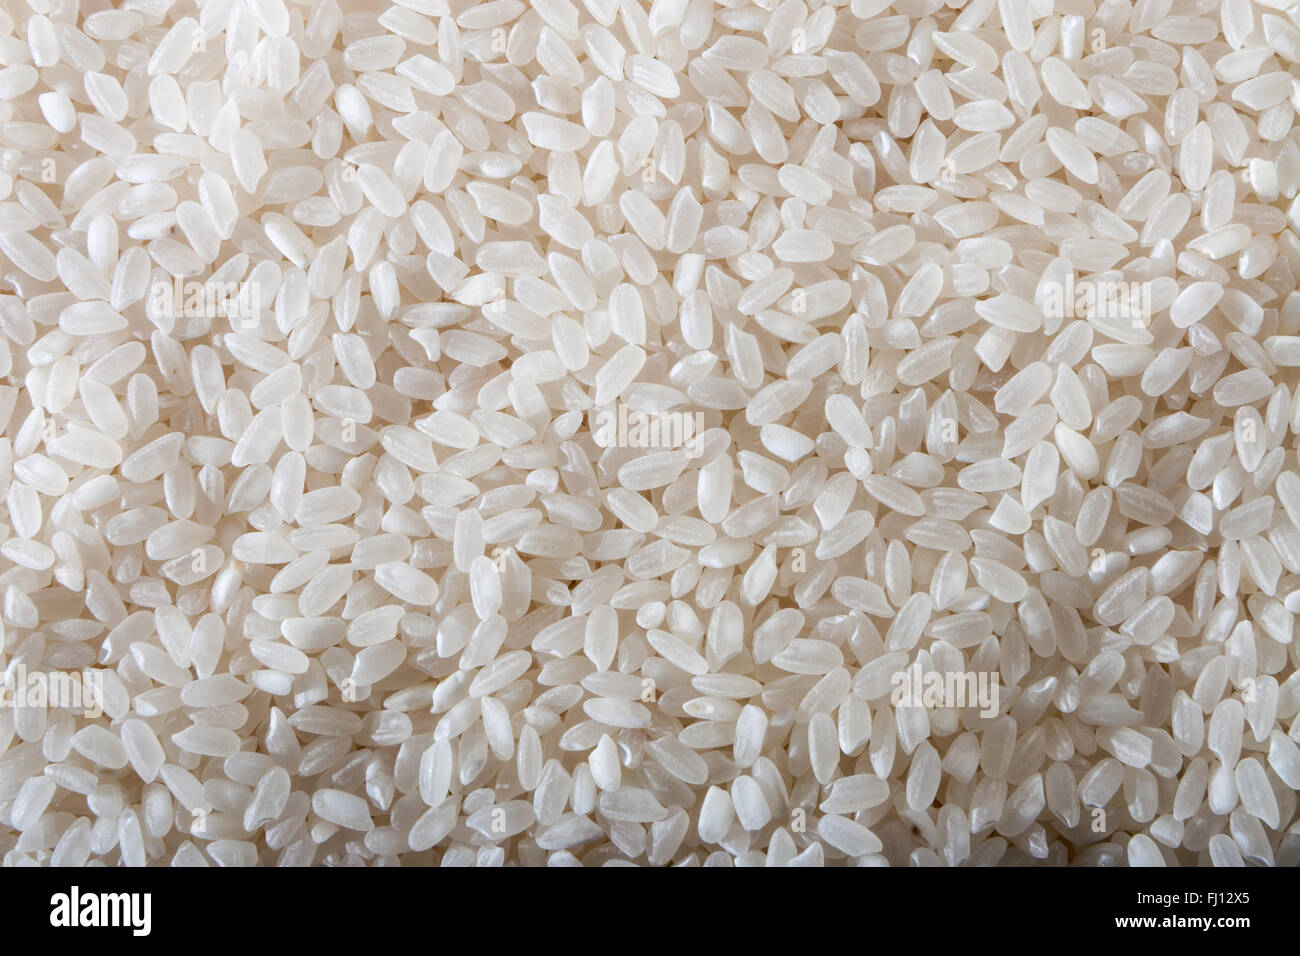 Uncooked raw white rice background Stock Photo - Alamy